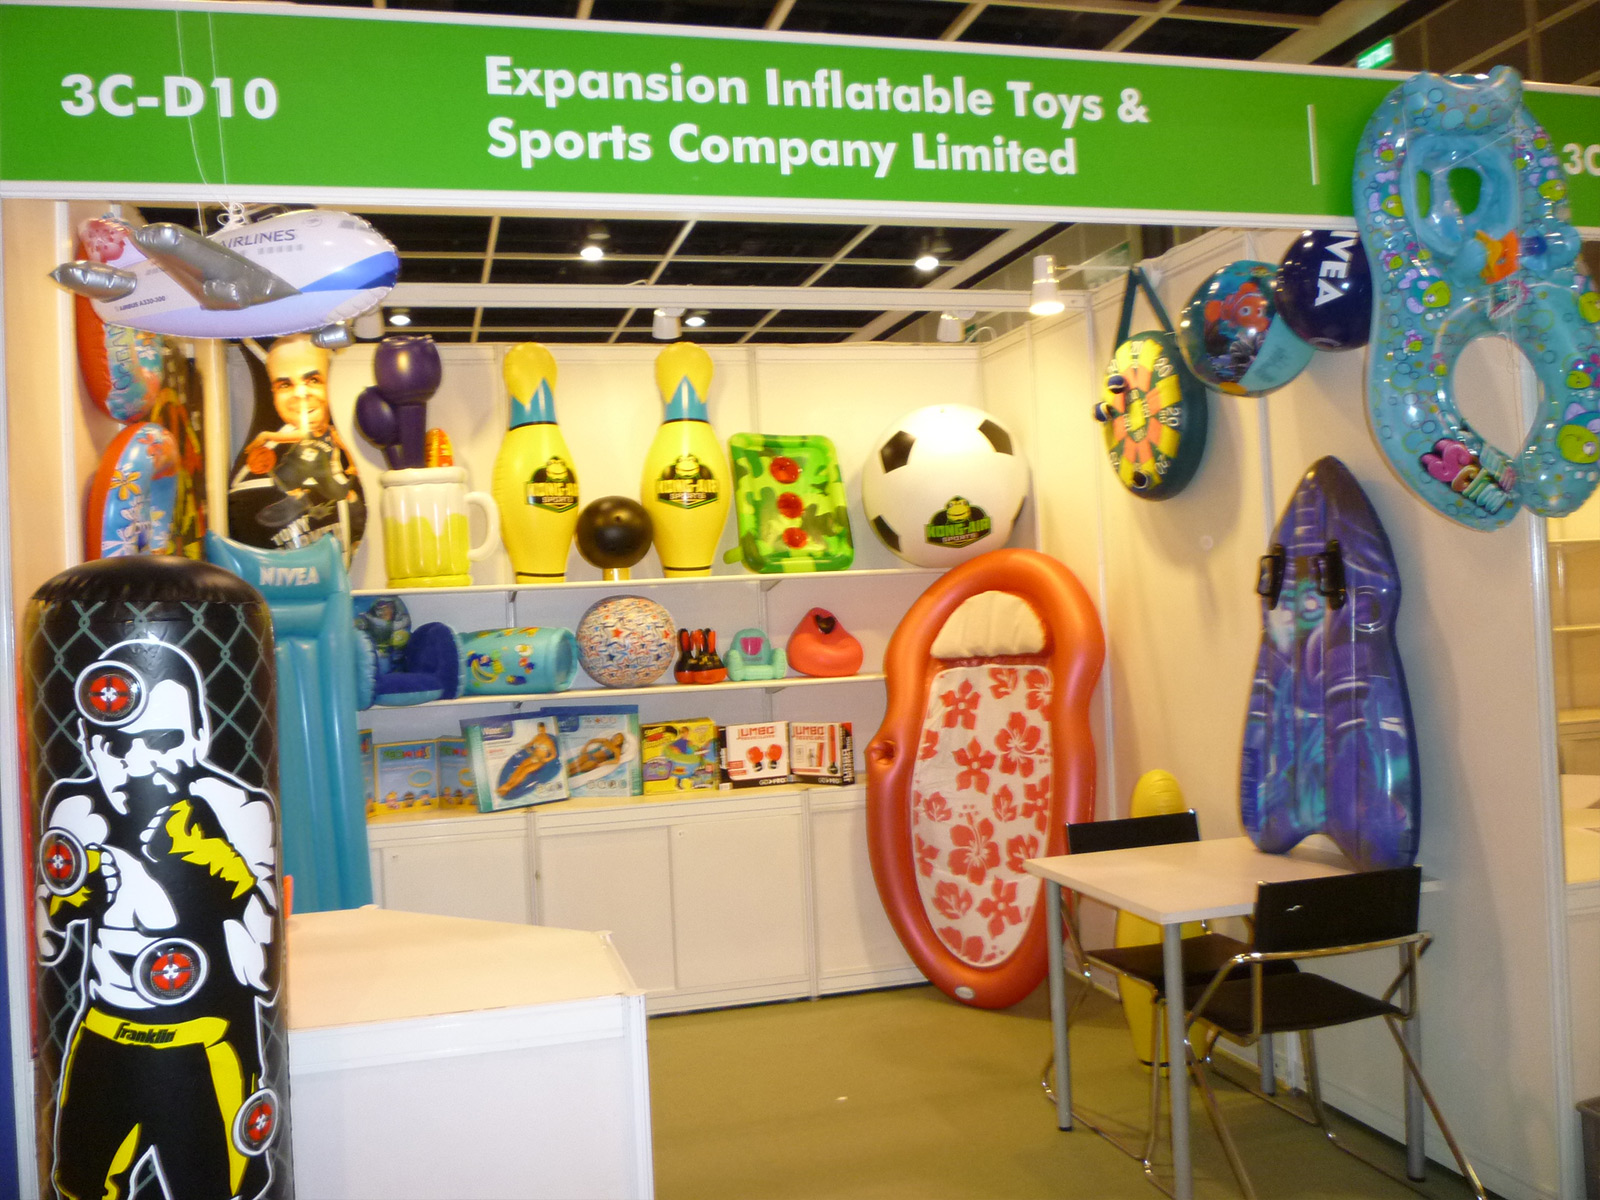 Hong Kong Toys and Games Fair in January 2015